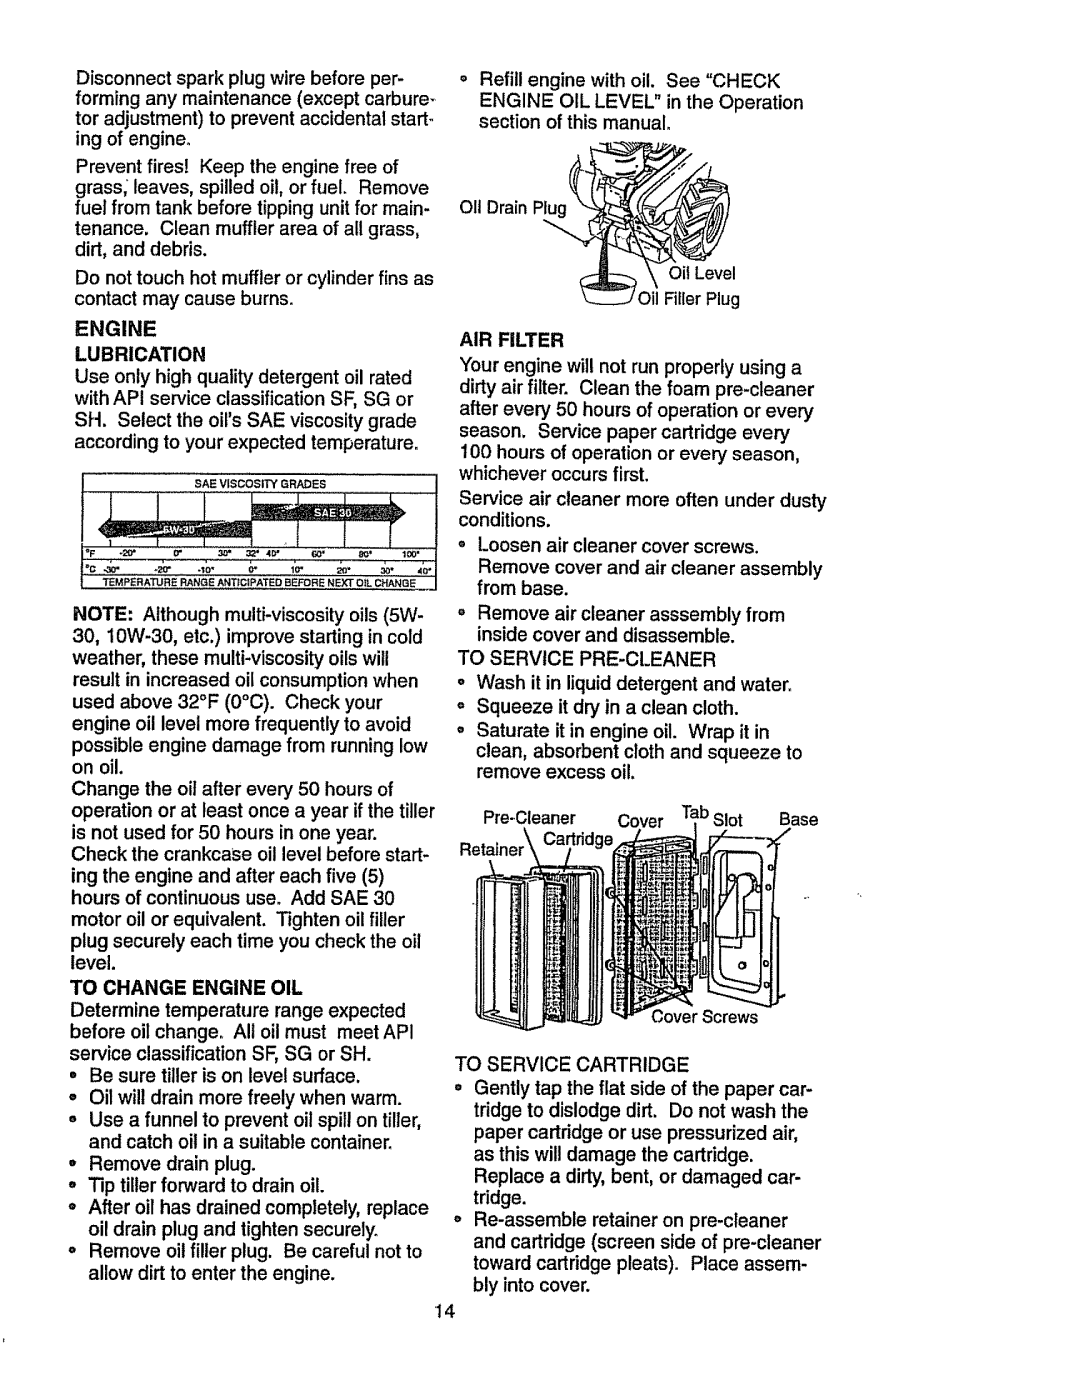 Craftsman 917.2933 owner manual Engine Lubrication 